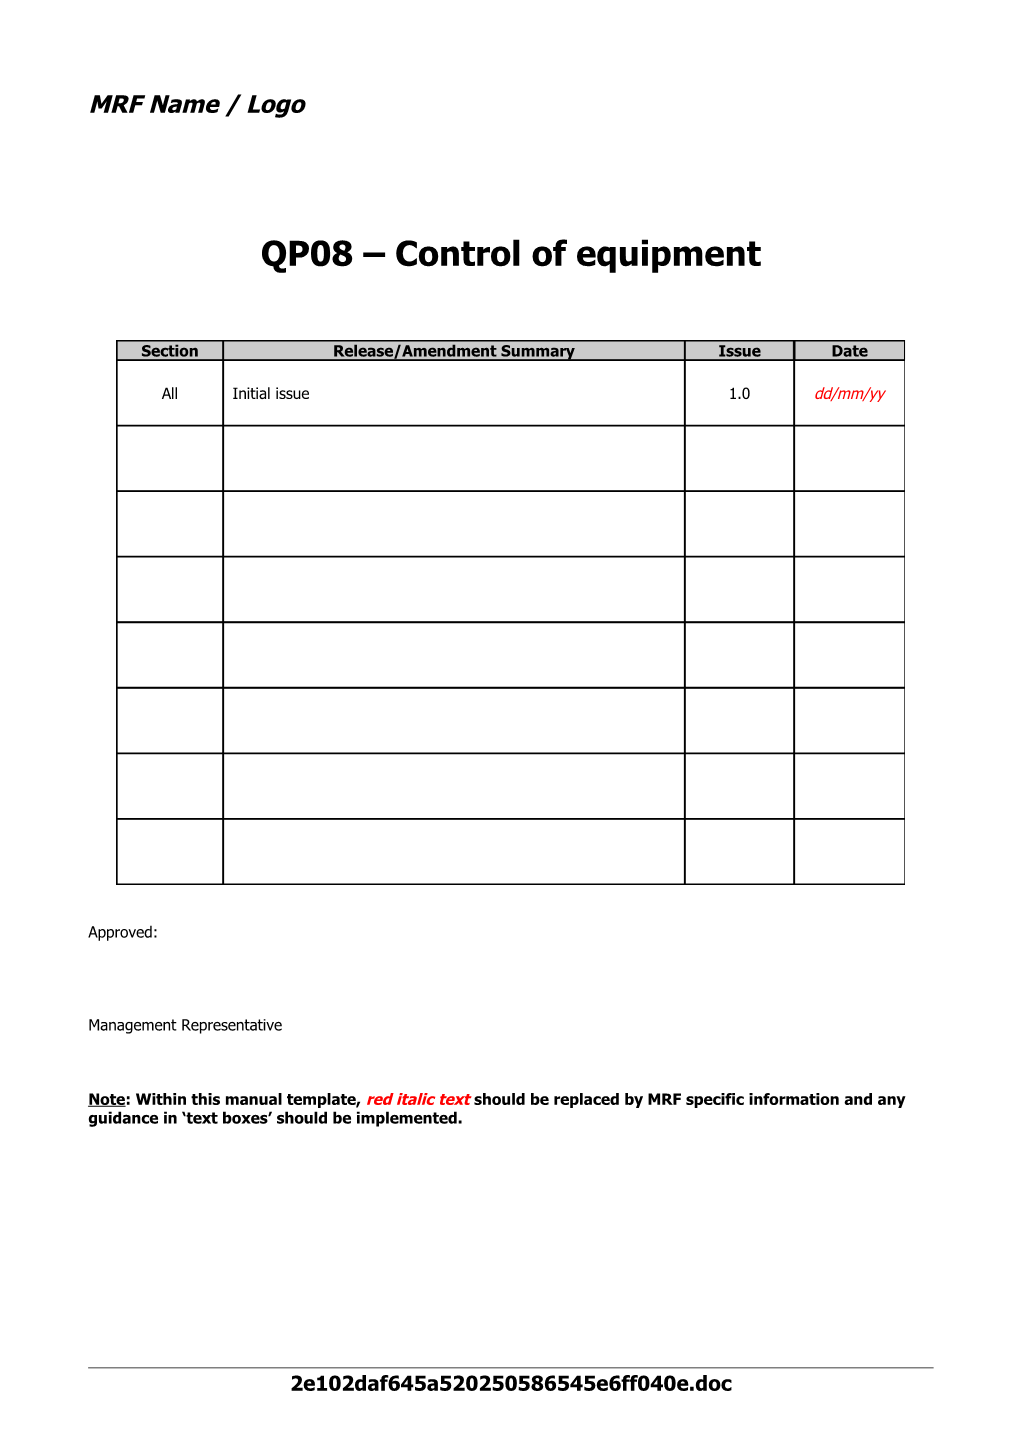 QP08 Control of Equipment